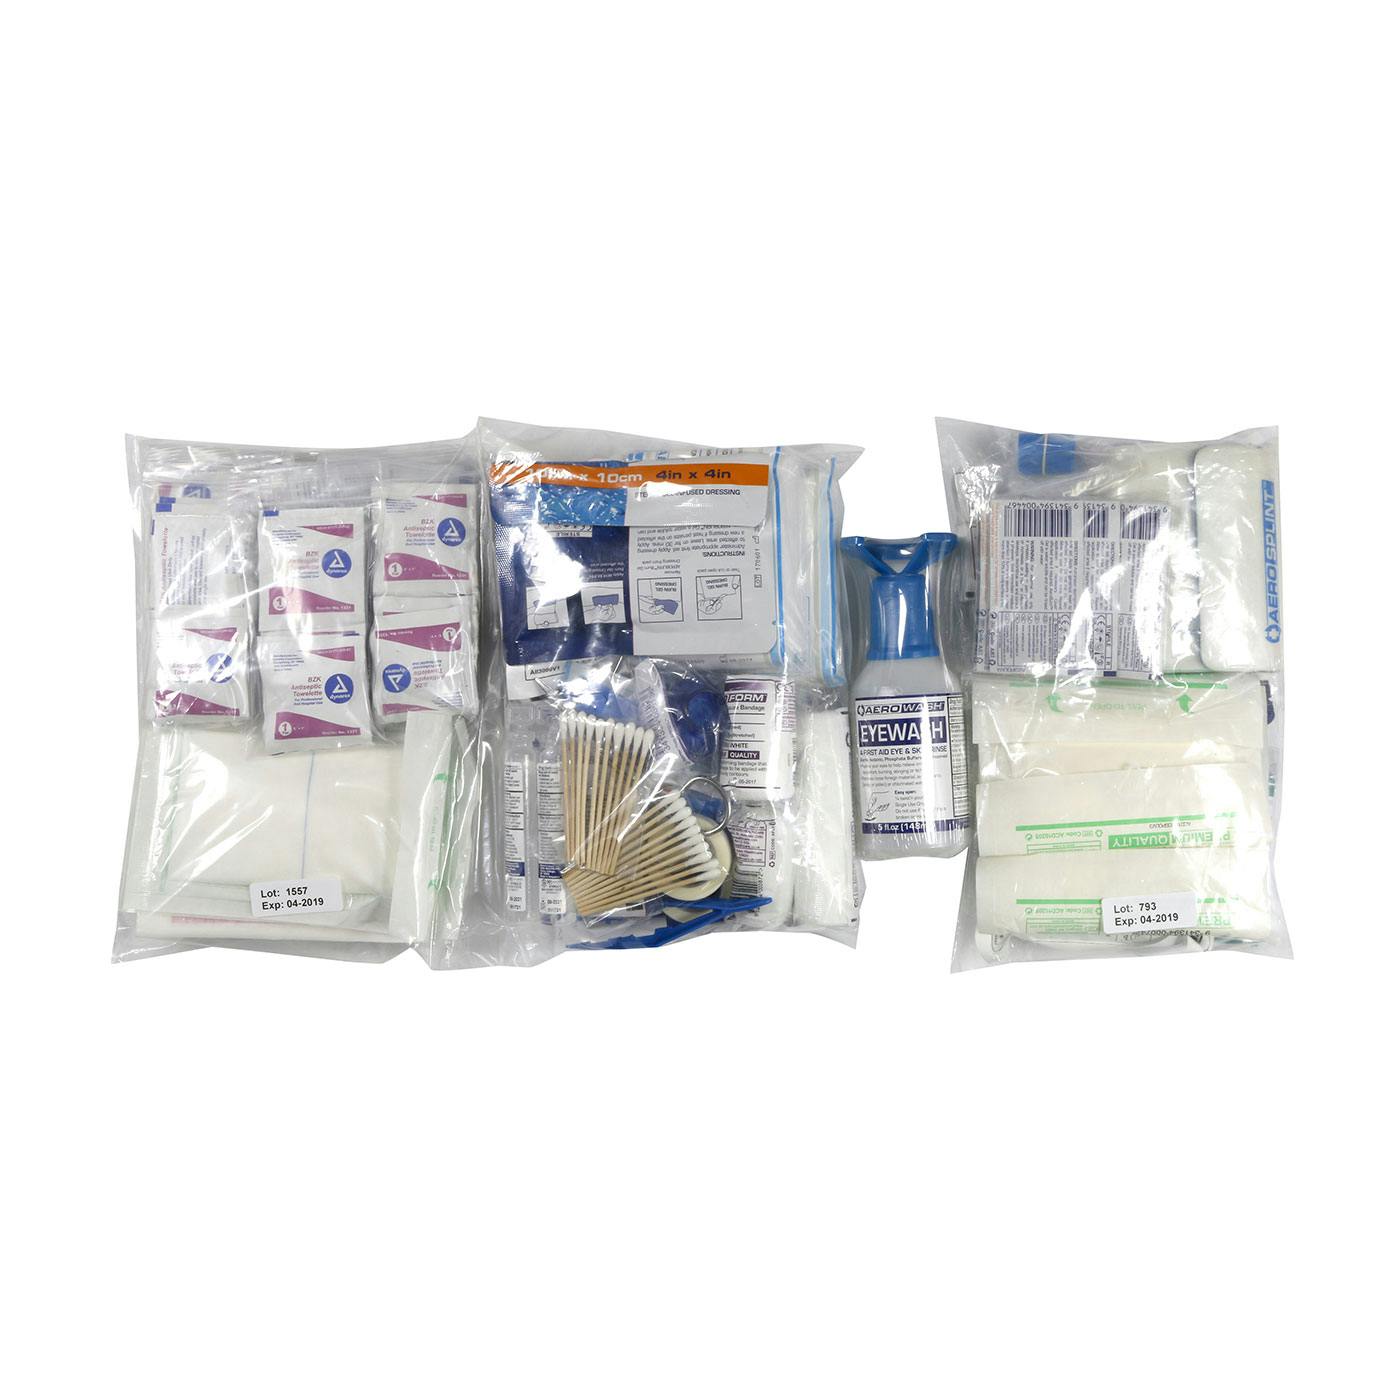 ANSI Class B First Aid Refill Pouches - 50 Person, Clear (299-15050B-RP) - KIT_0